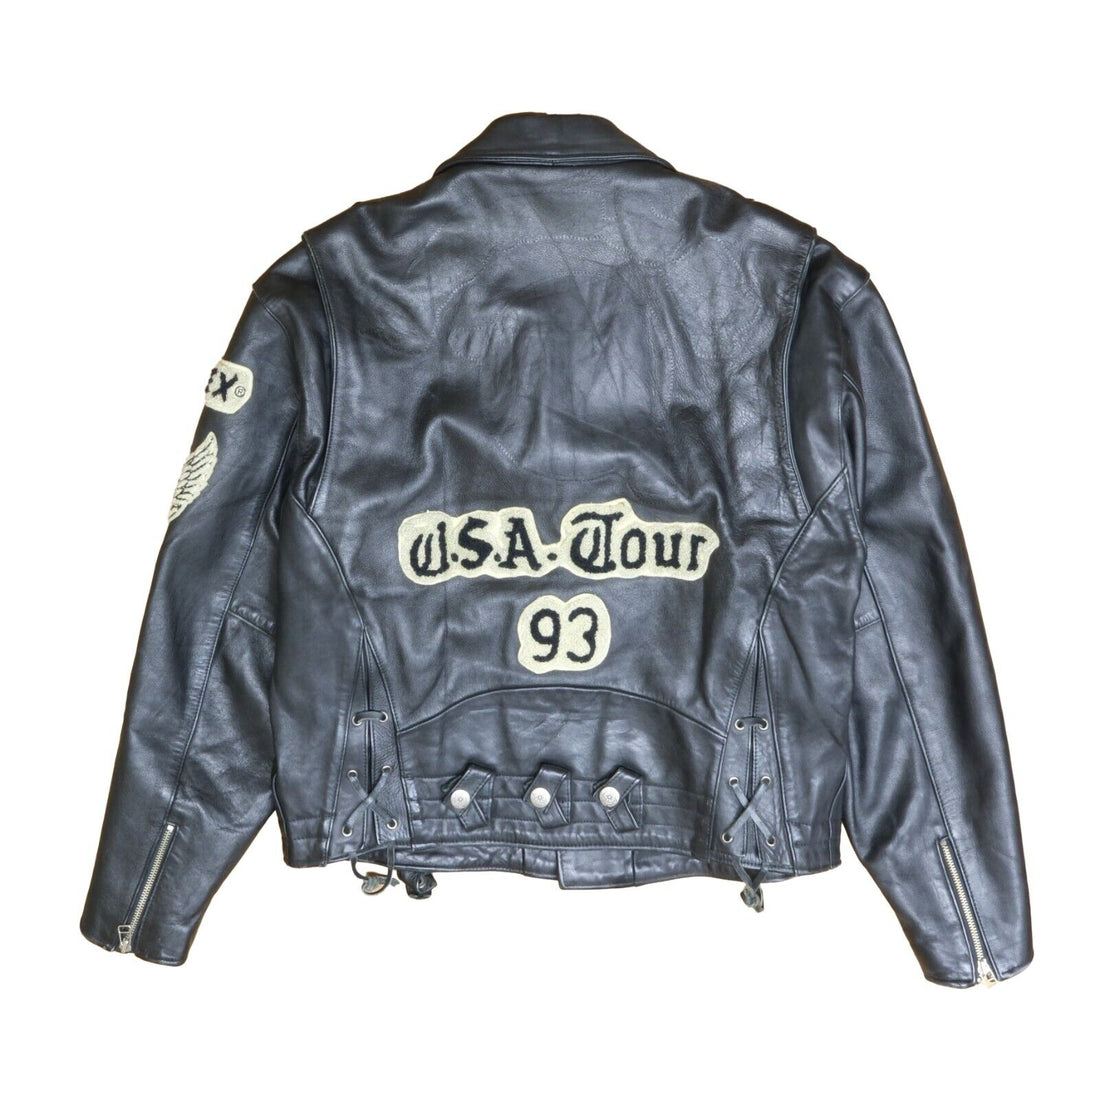 Vintage Avirex USA Tour Classic Motorcycle Leather Jacket Size XL 1993 90s